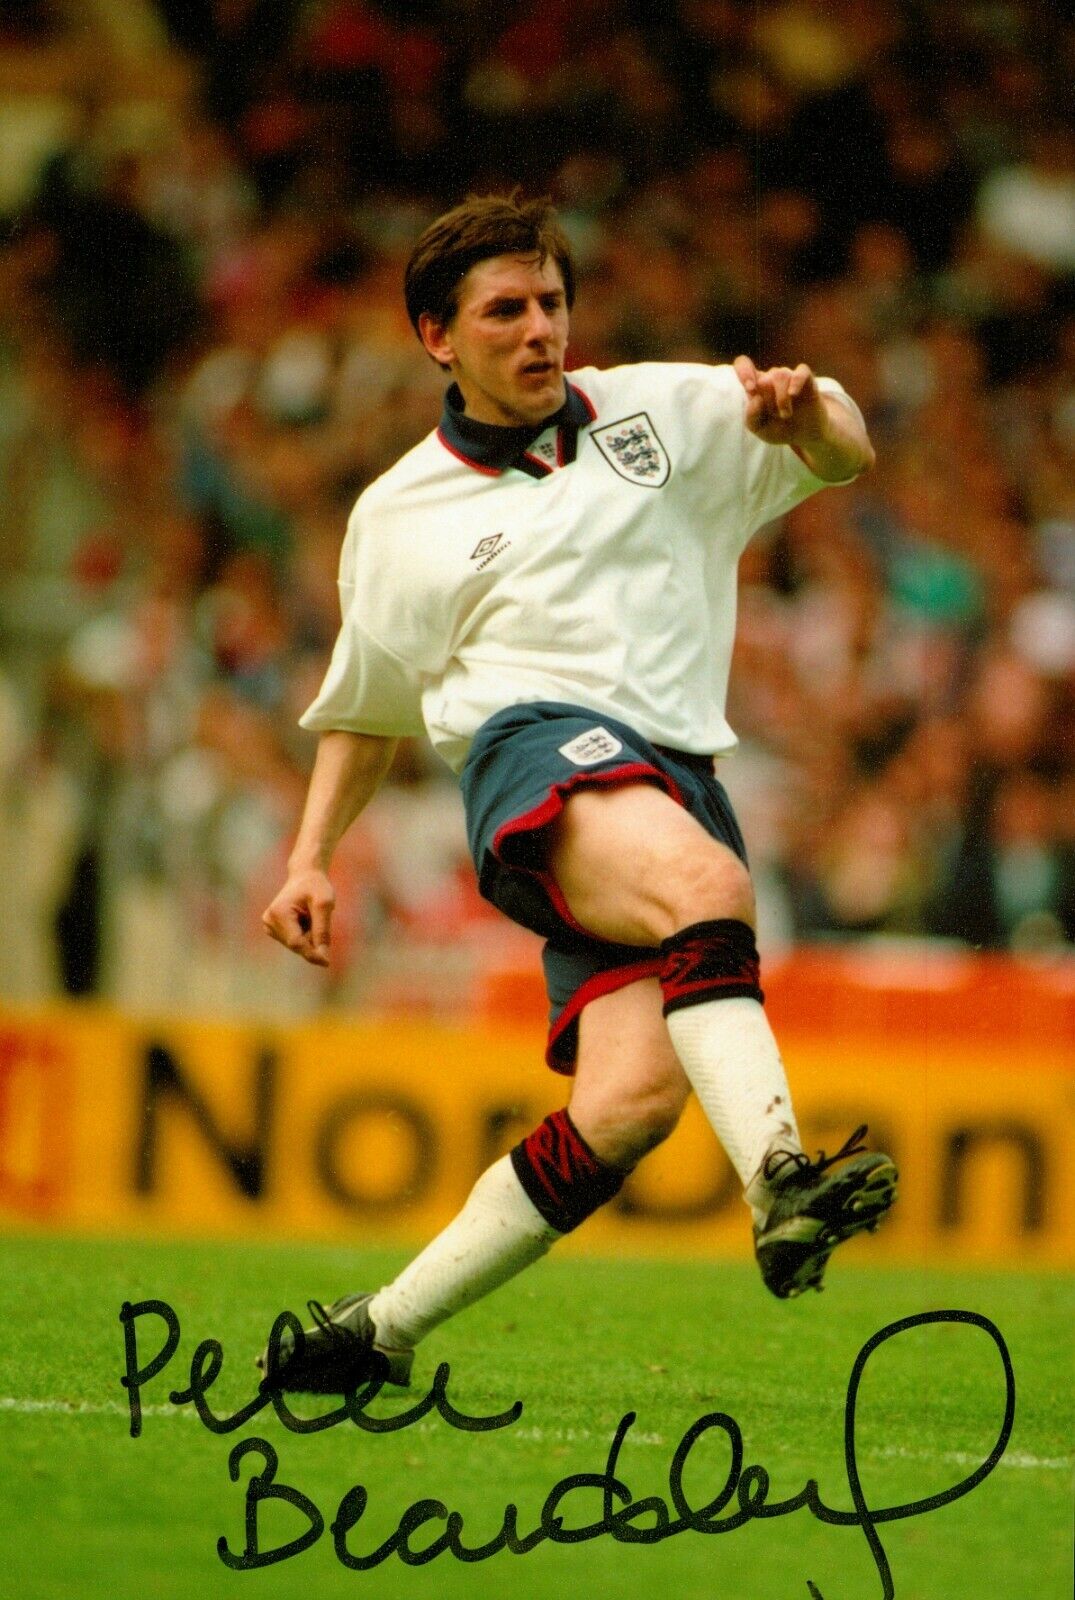 Peter Beardsley Signed 6x4 Photo Poster painting England Newcastle United Genuine Autograph +COA